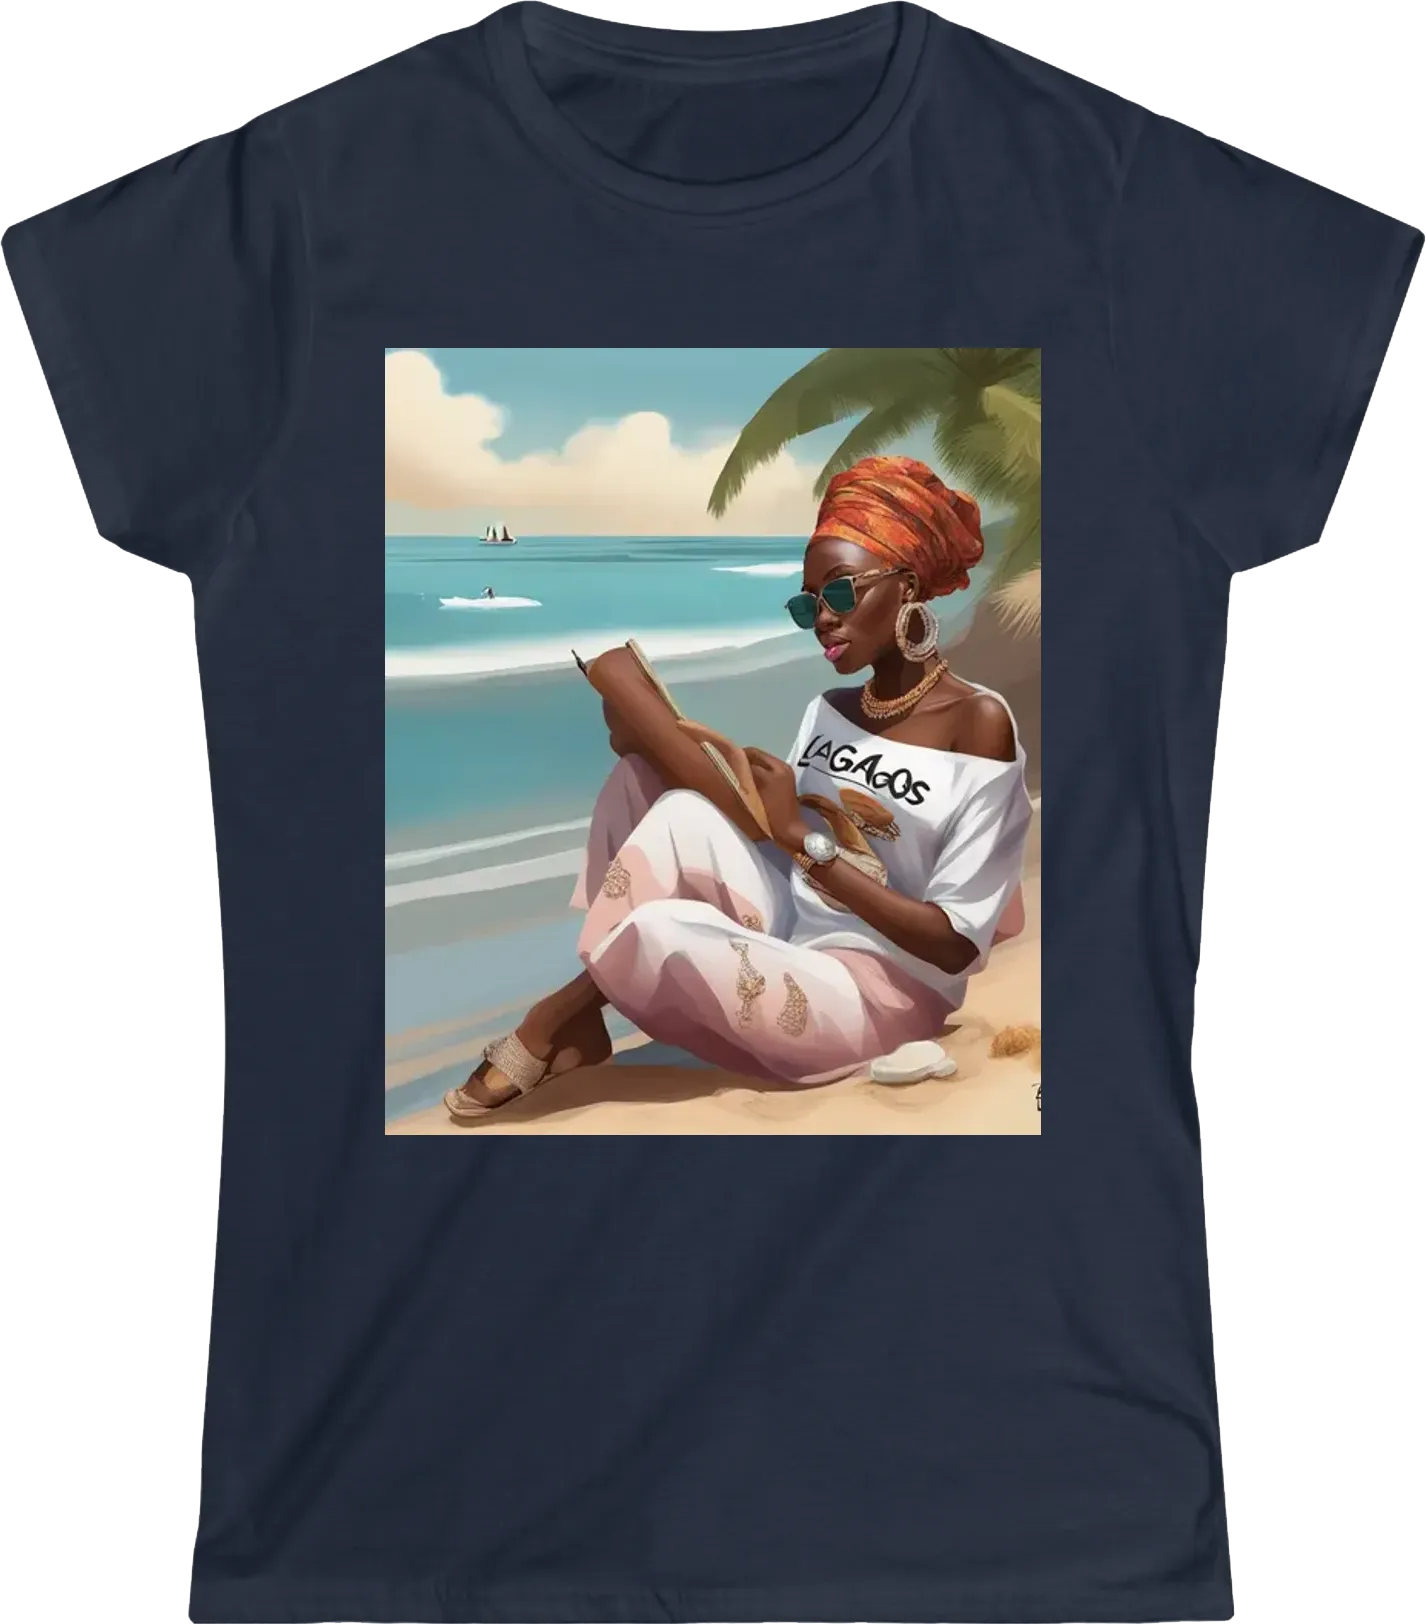 Write lagos on shirt with beach life a baeutiful yoruba girl sitting by the beach